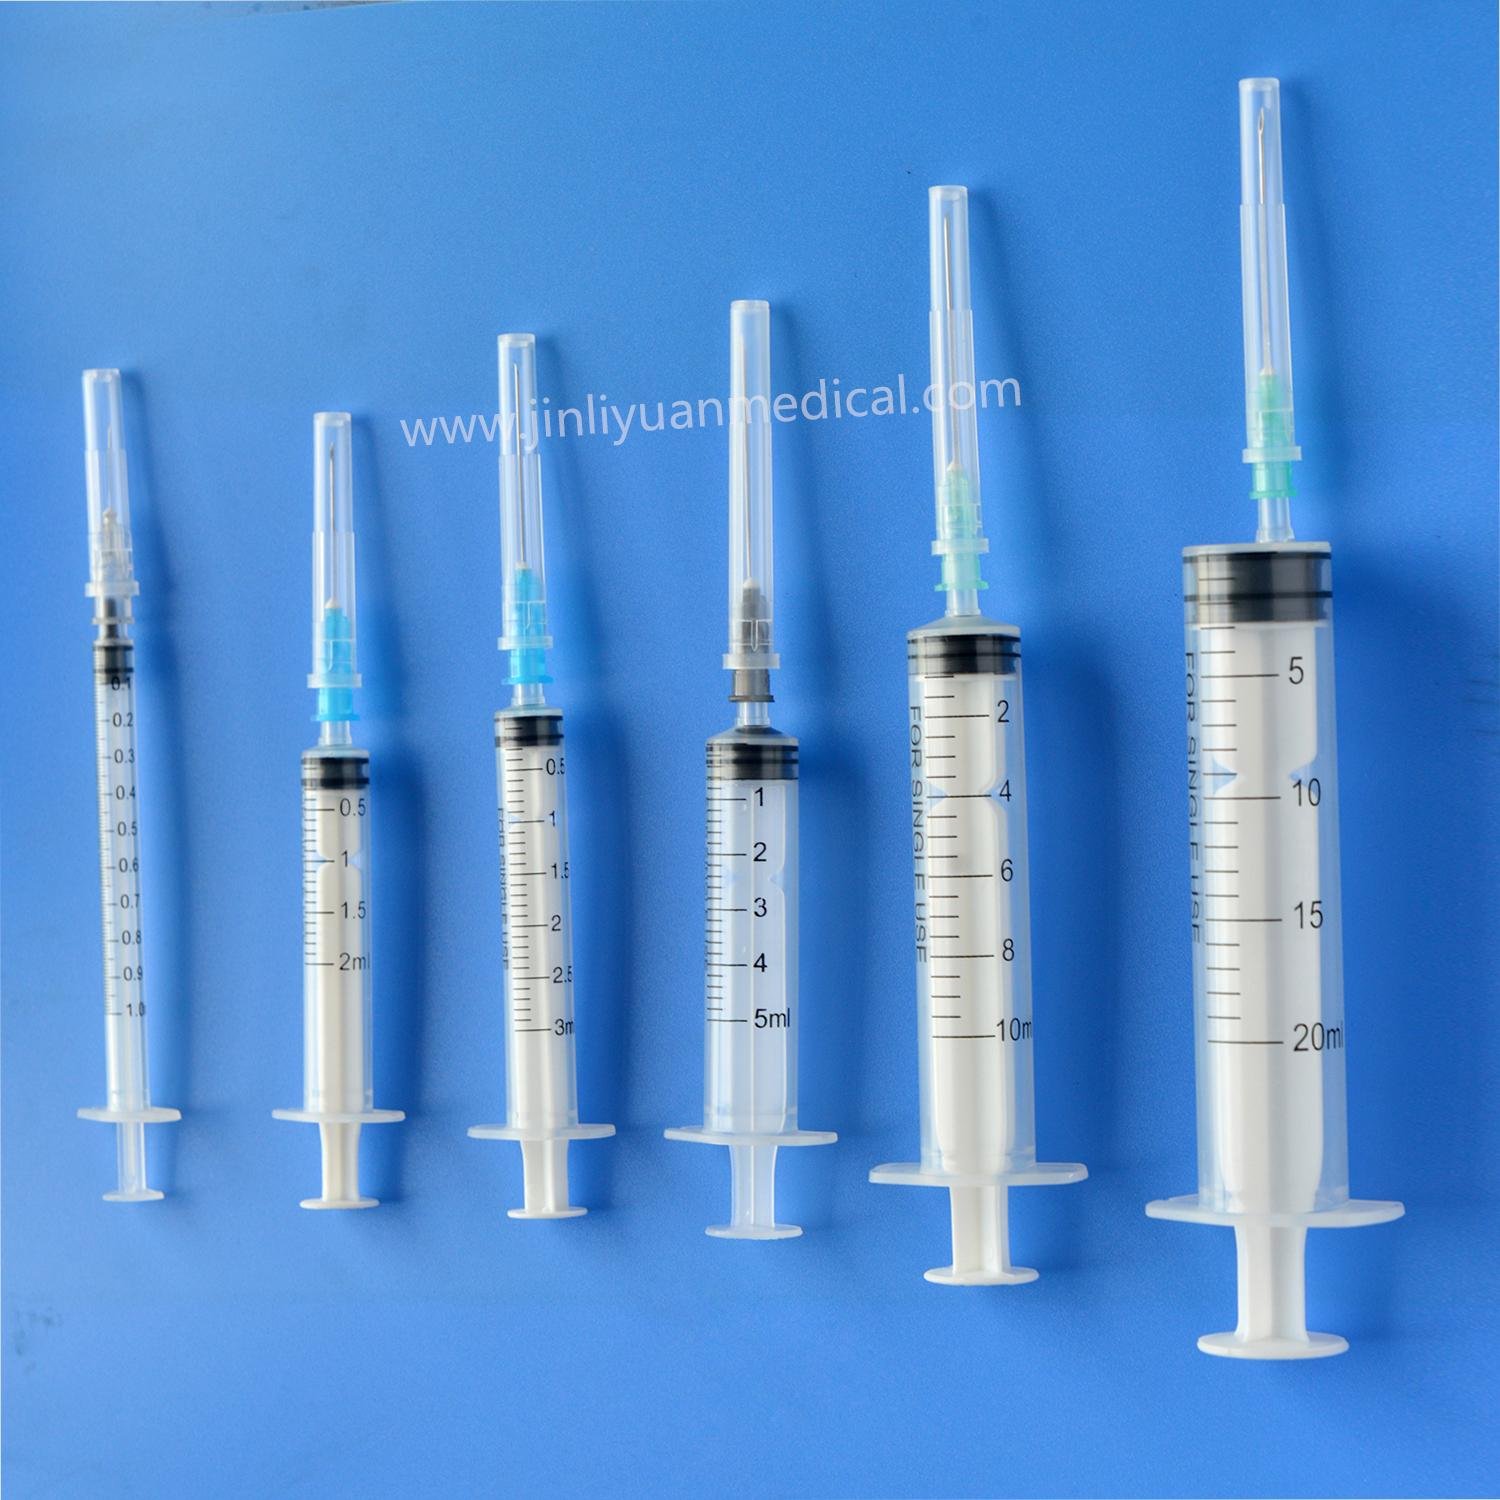 3 part disposable sterile syringes luer lock or luer slip